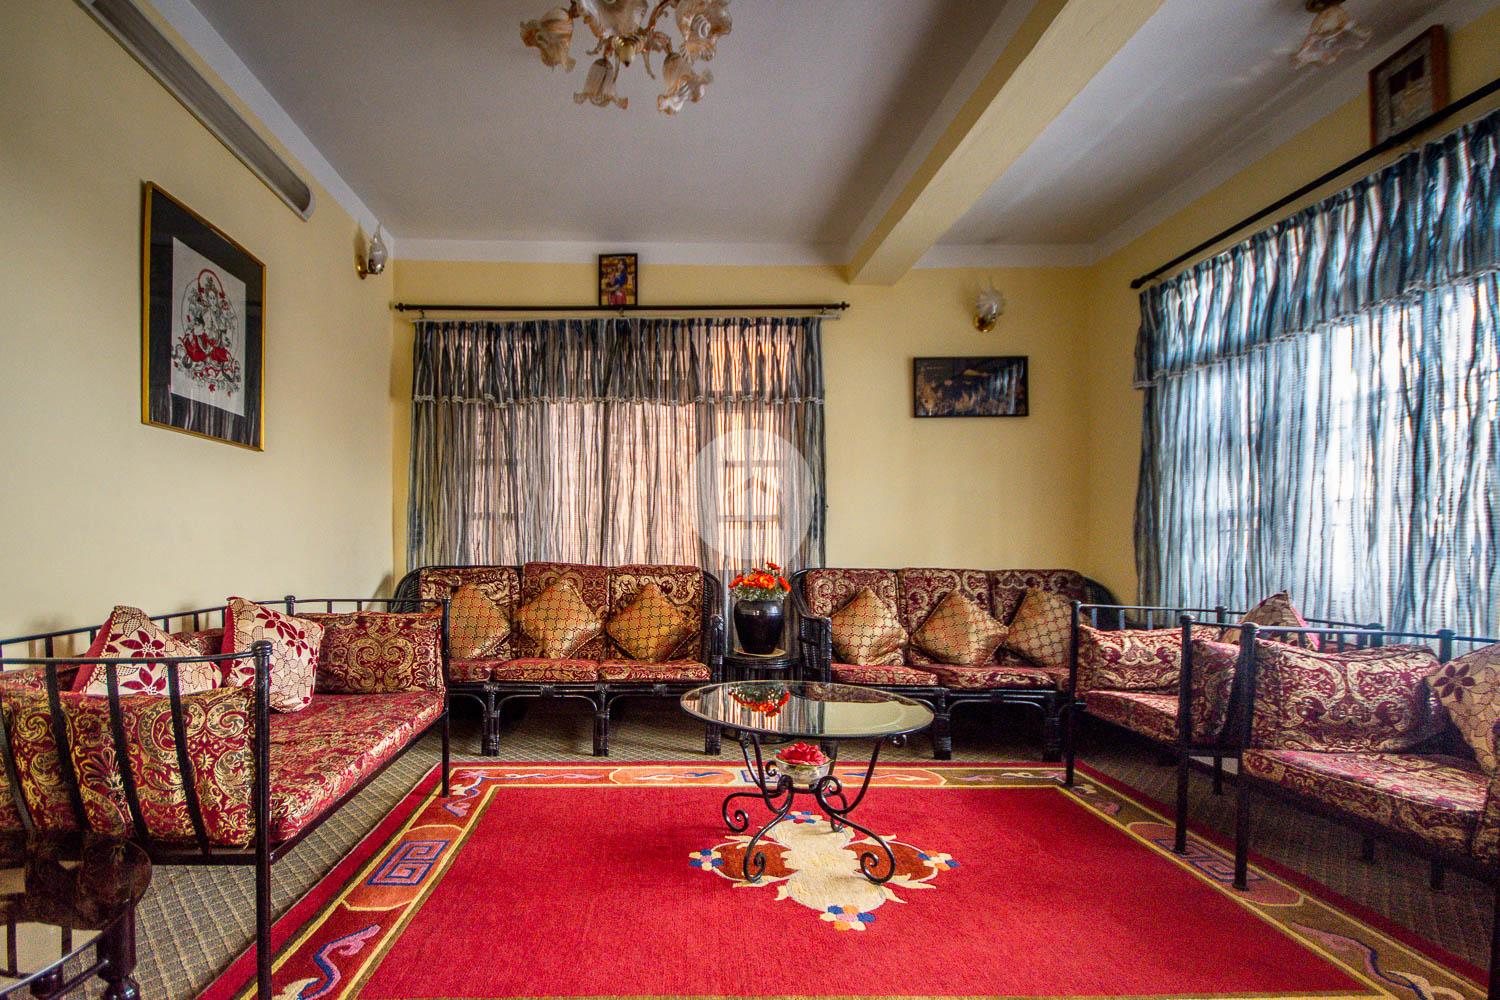 Residential House sale : House for Sale in Sukedhara, Kathmandu Image 6